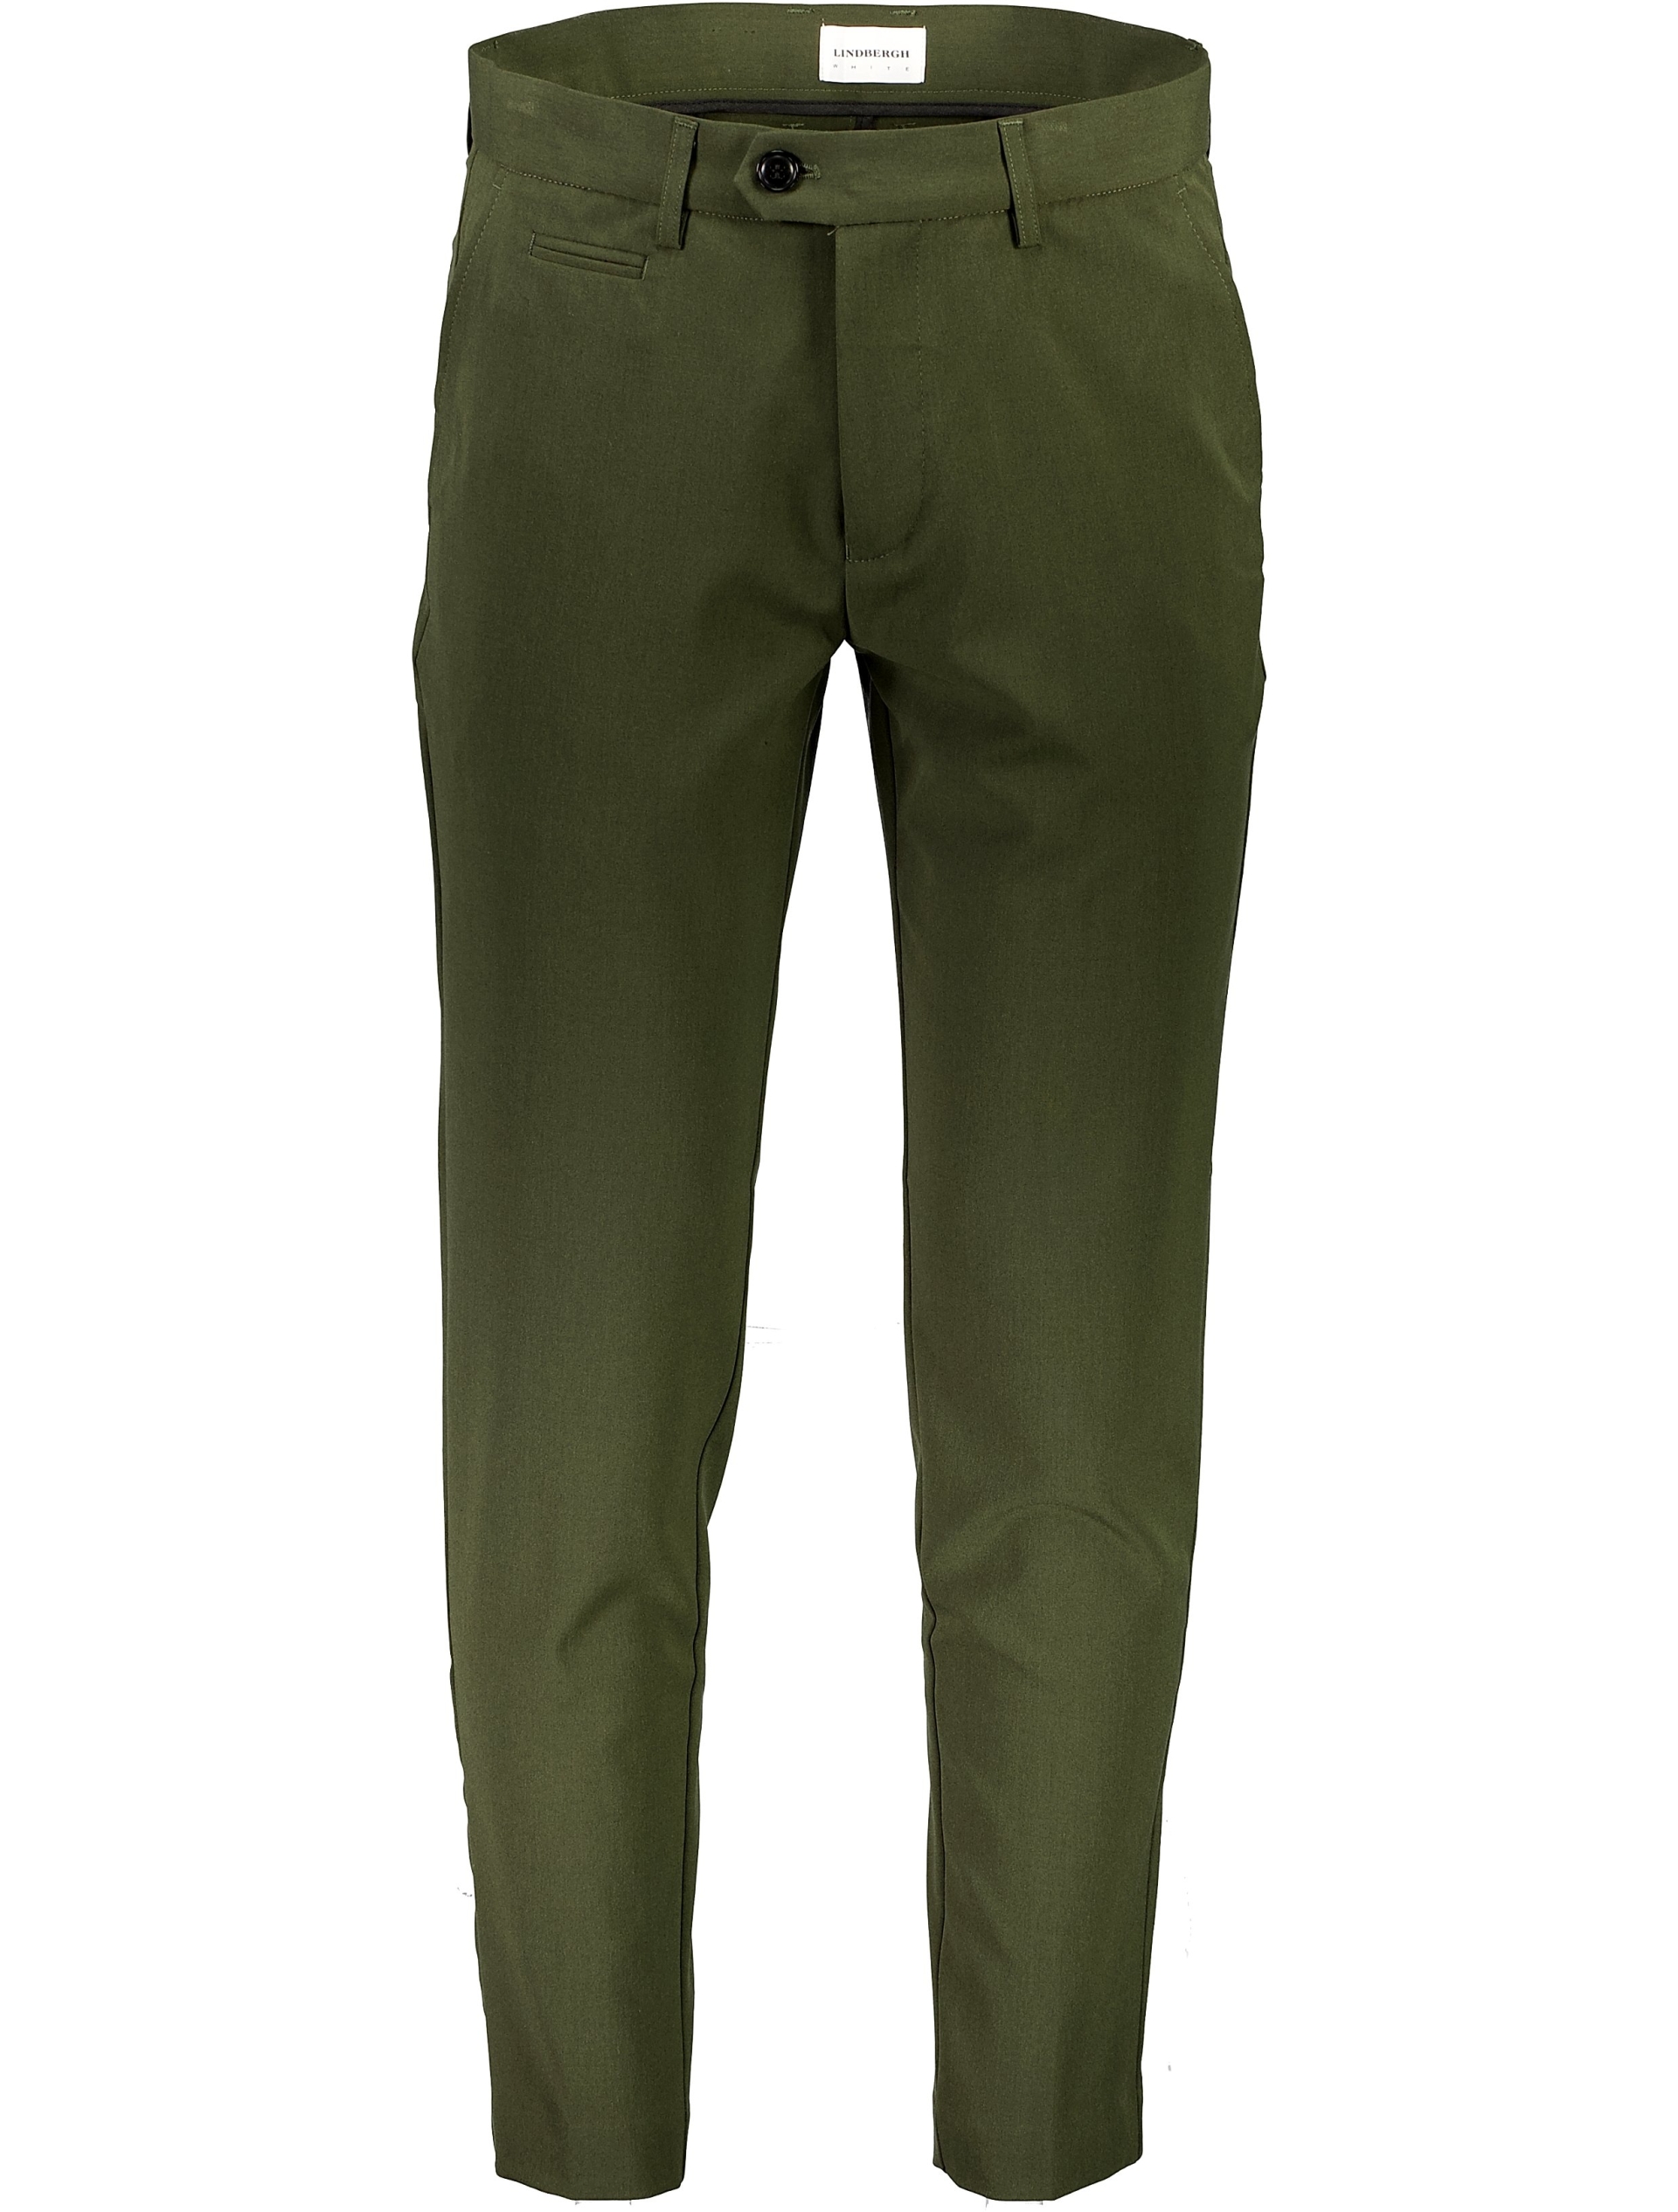 Lindbergh Performance pants grøn / wood green